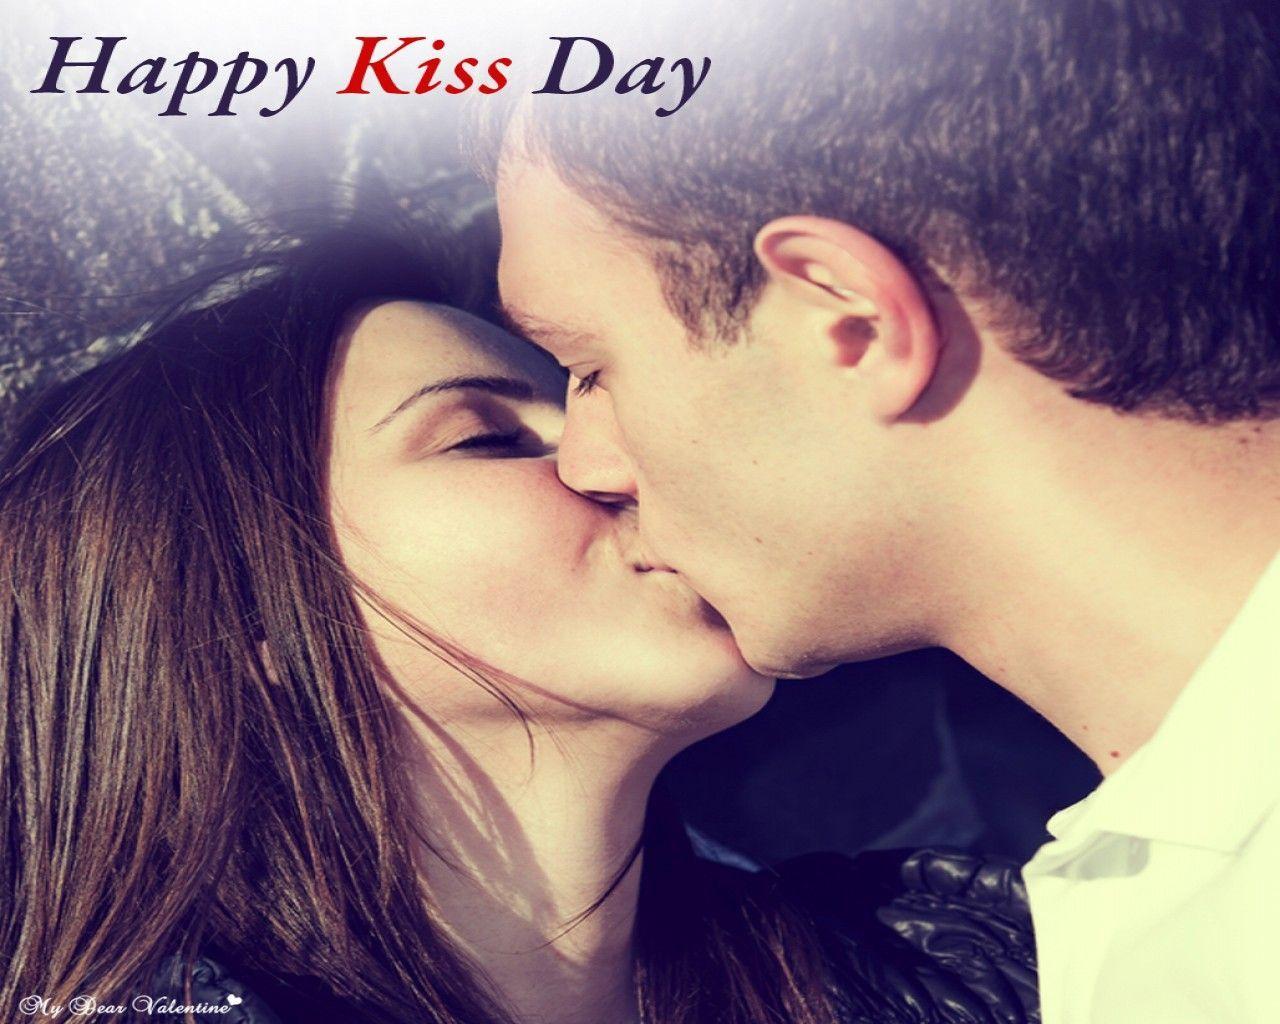 Happy kiss day wallpaper {HD image}